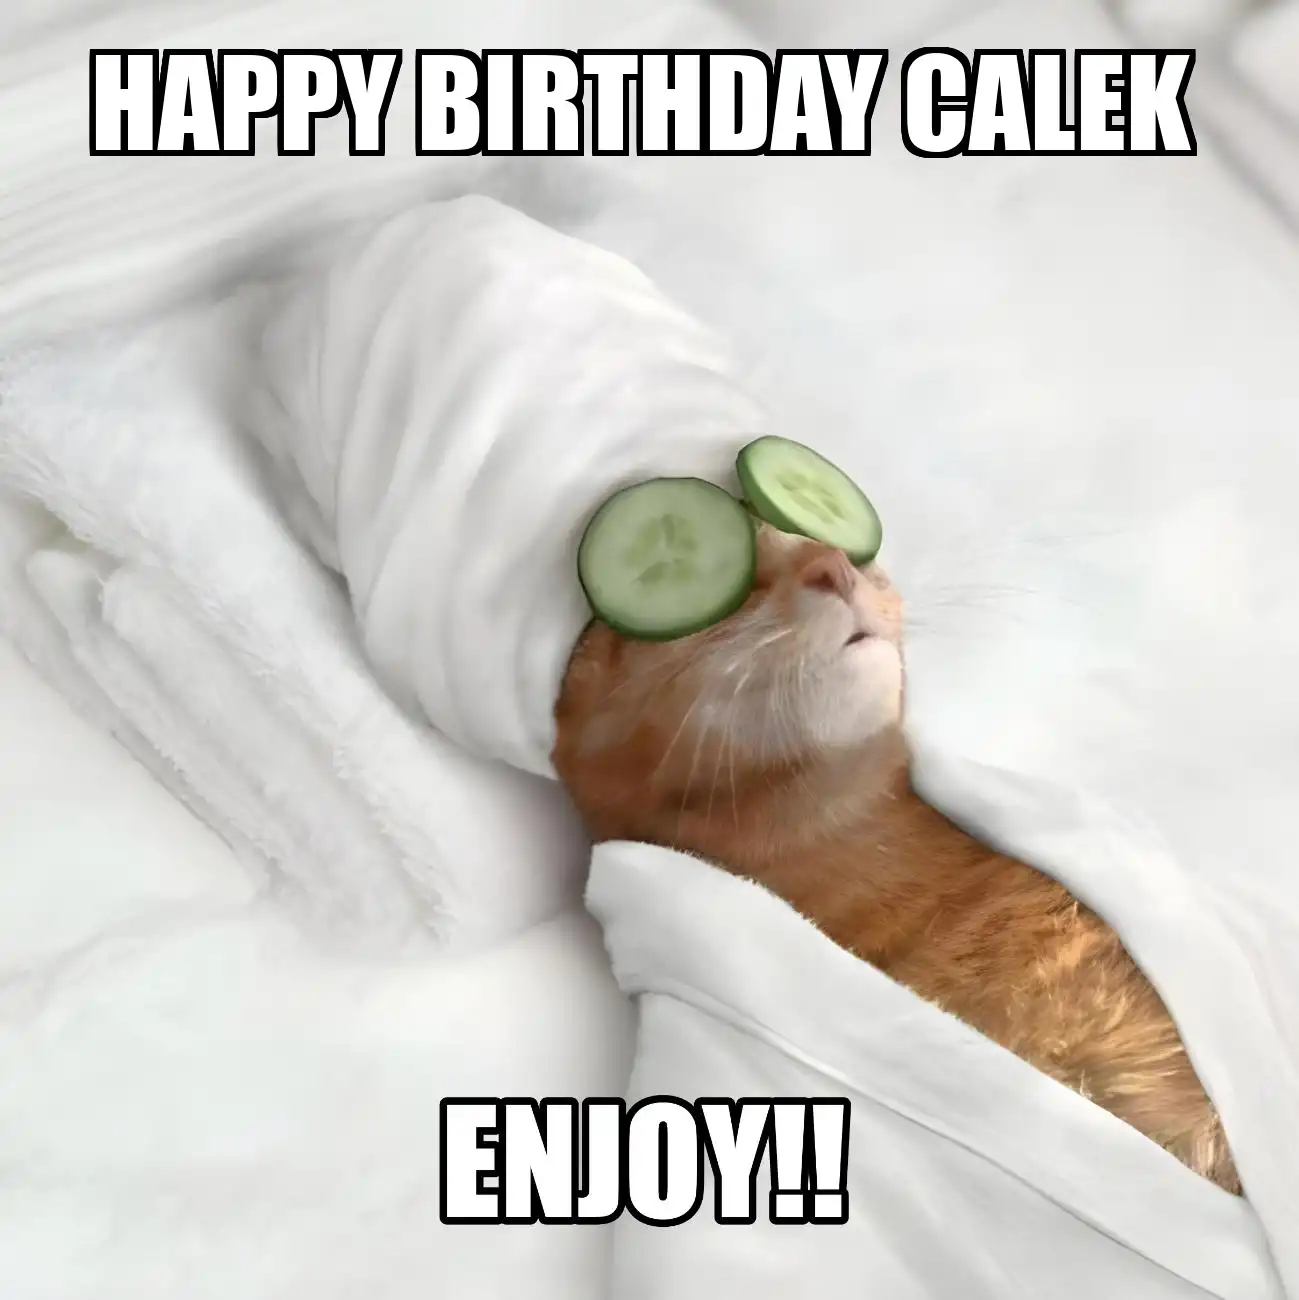 Happy Birthday Calek Enjoy Cat Meme